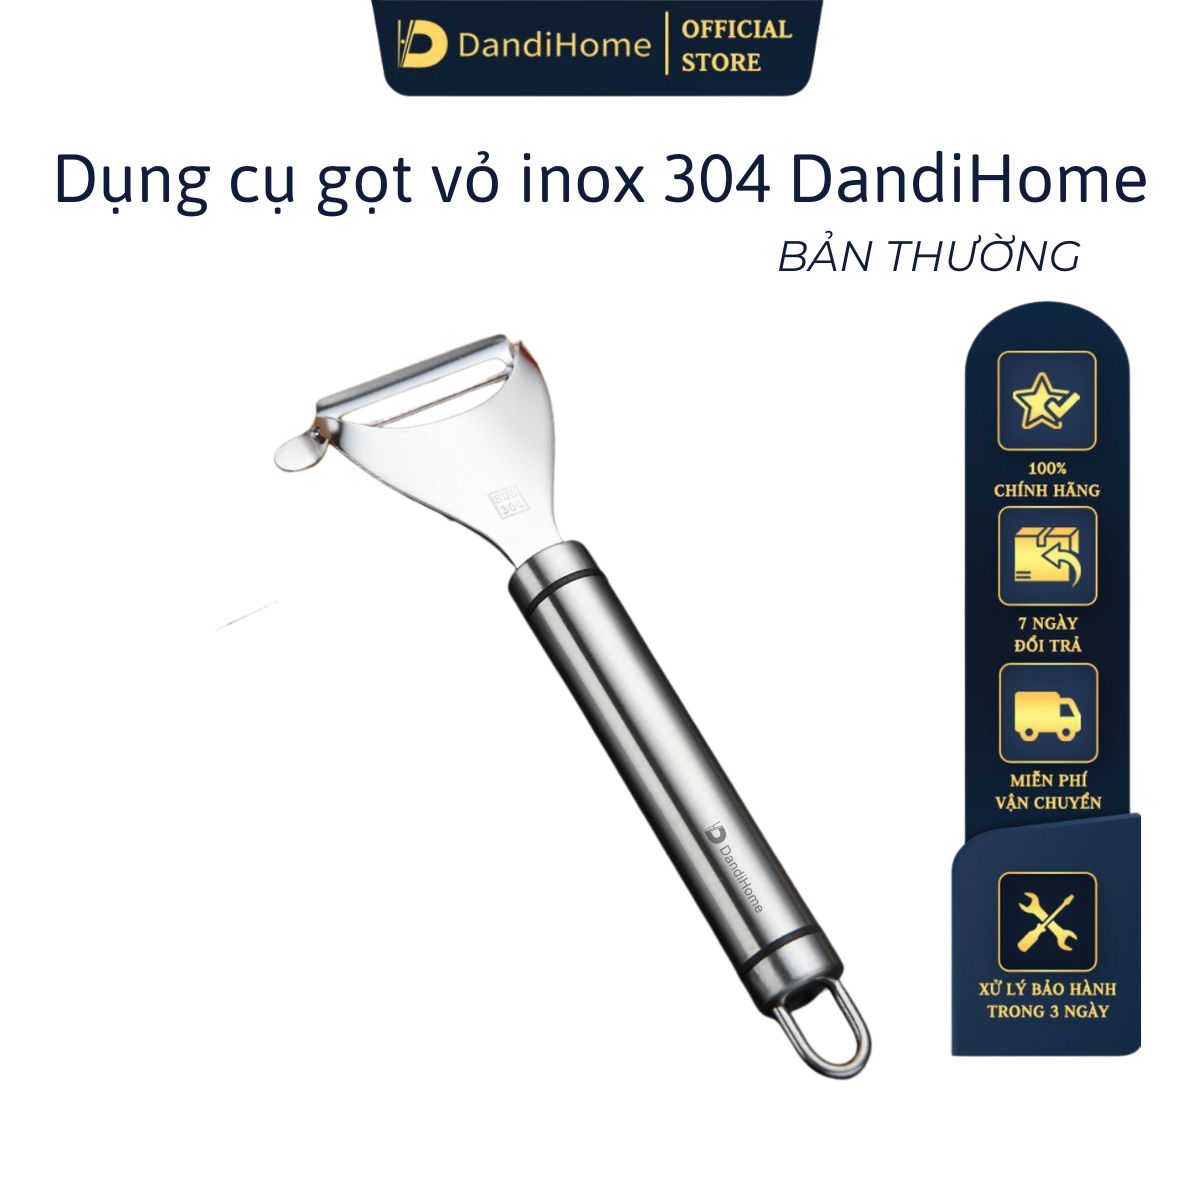 Dụng cụ gọt vỏ inox 304 DandiHome